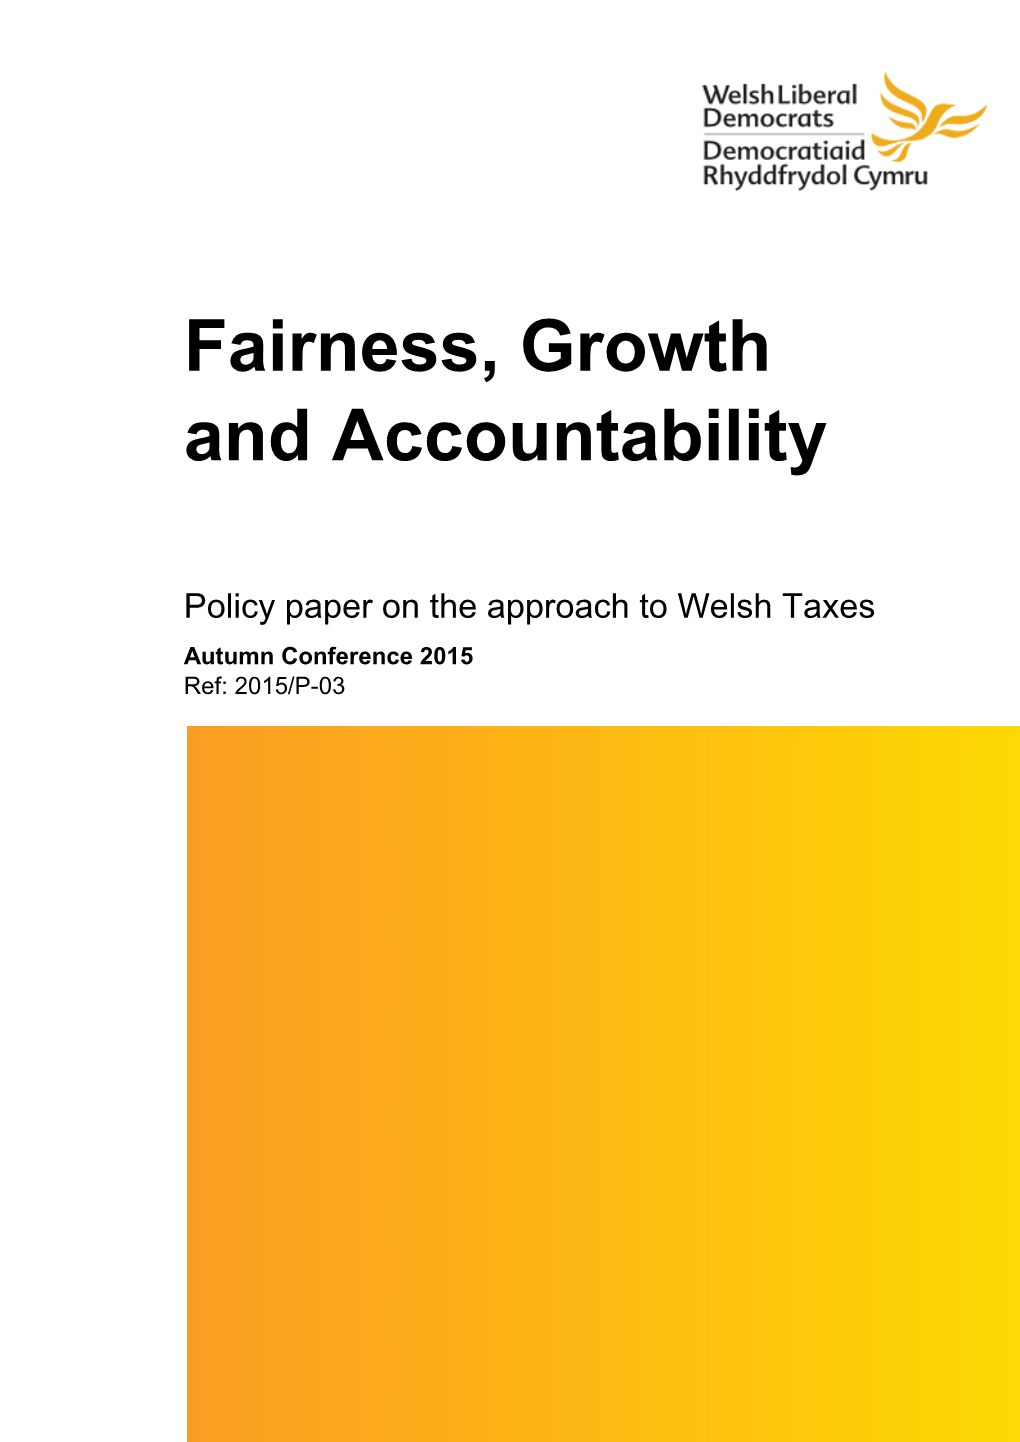 Fairness, Growth and Accountability